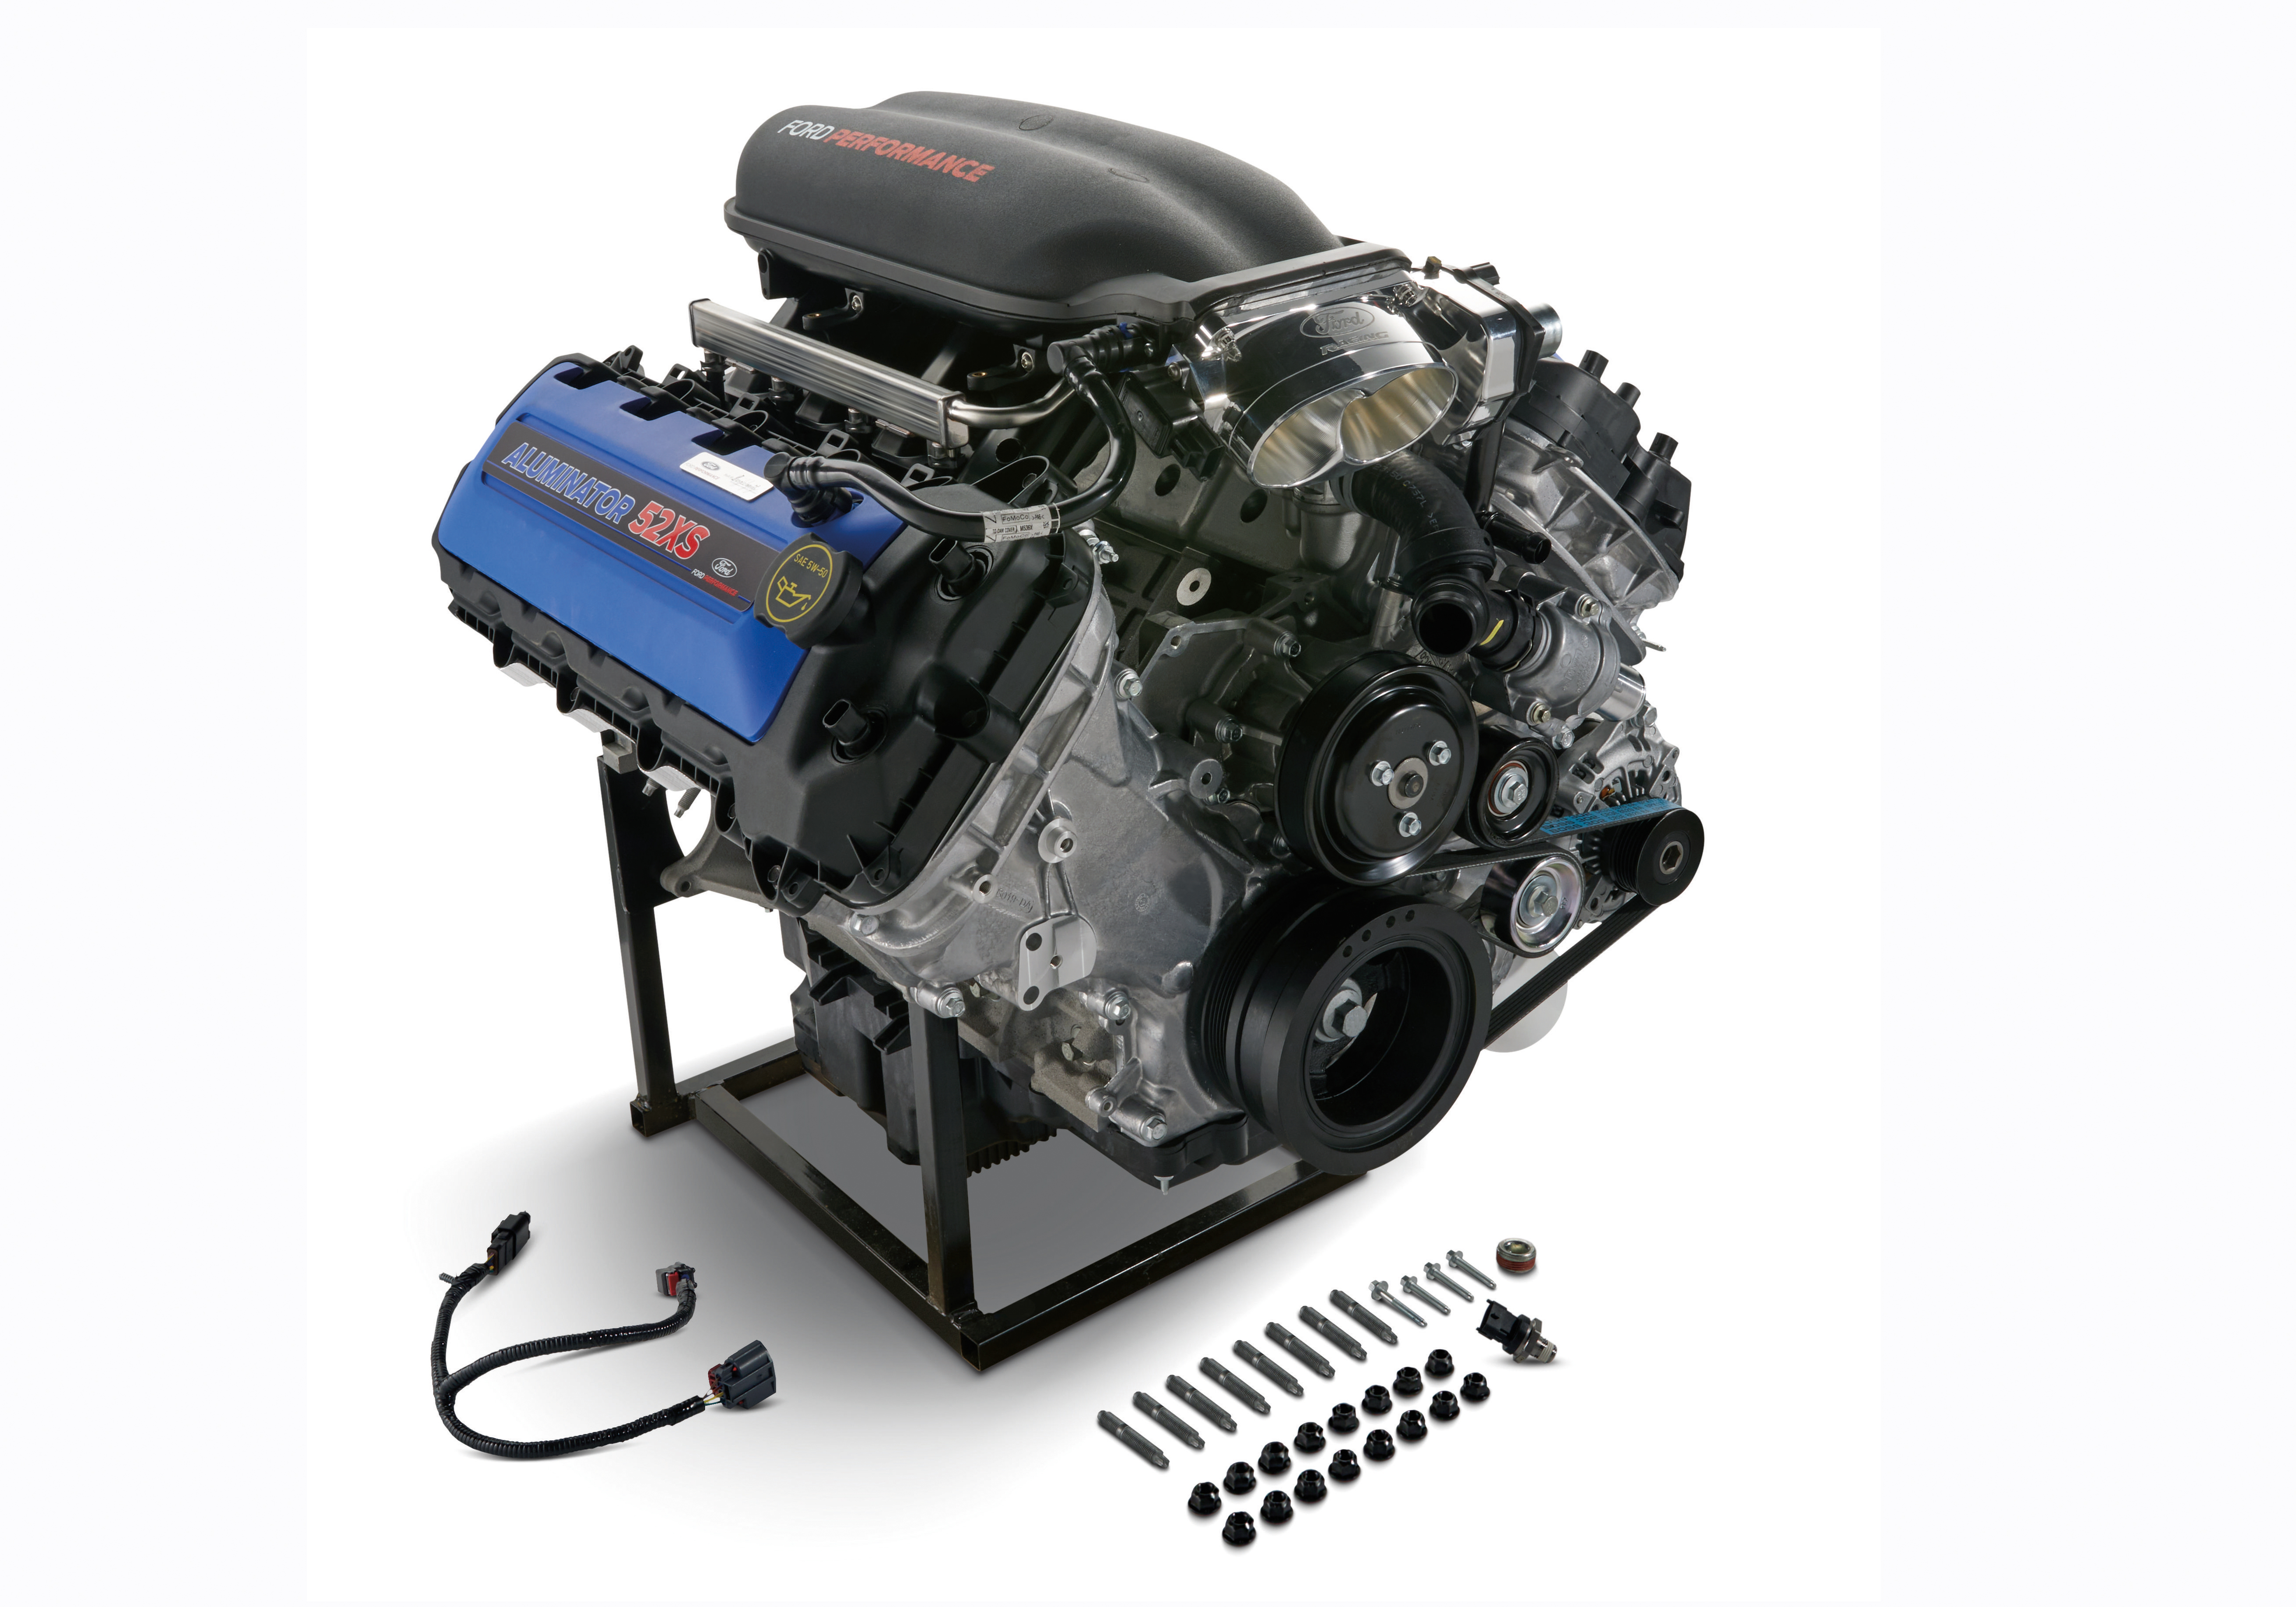 Ford SB Compatible 427 c.i. Engine and TKX Manual Transmission